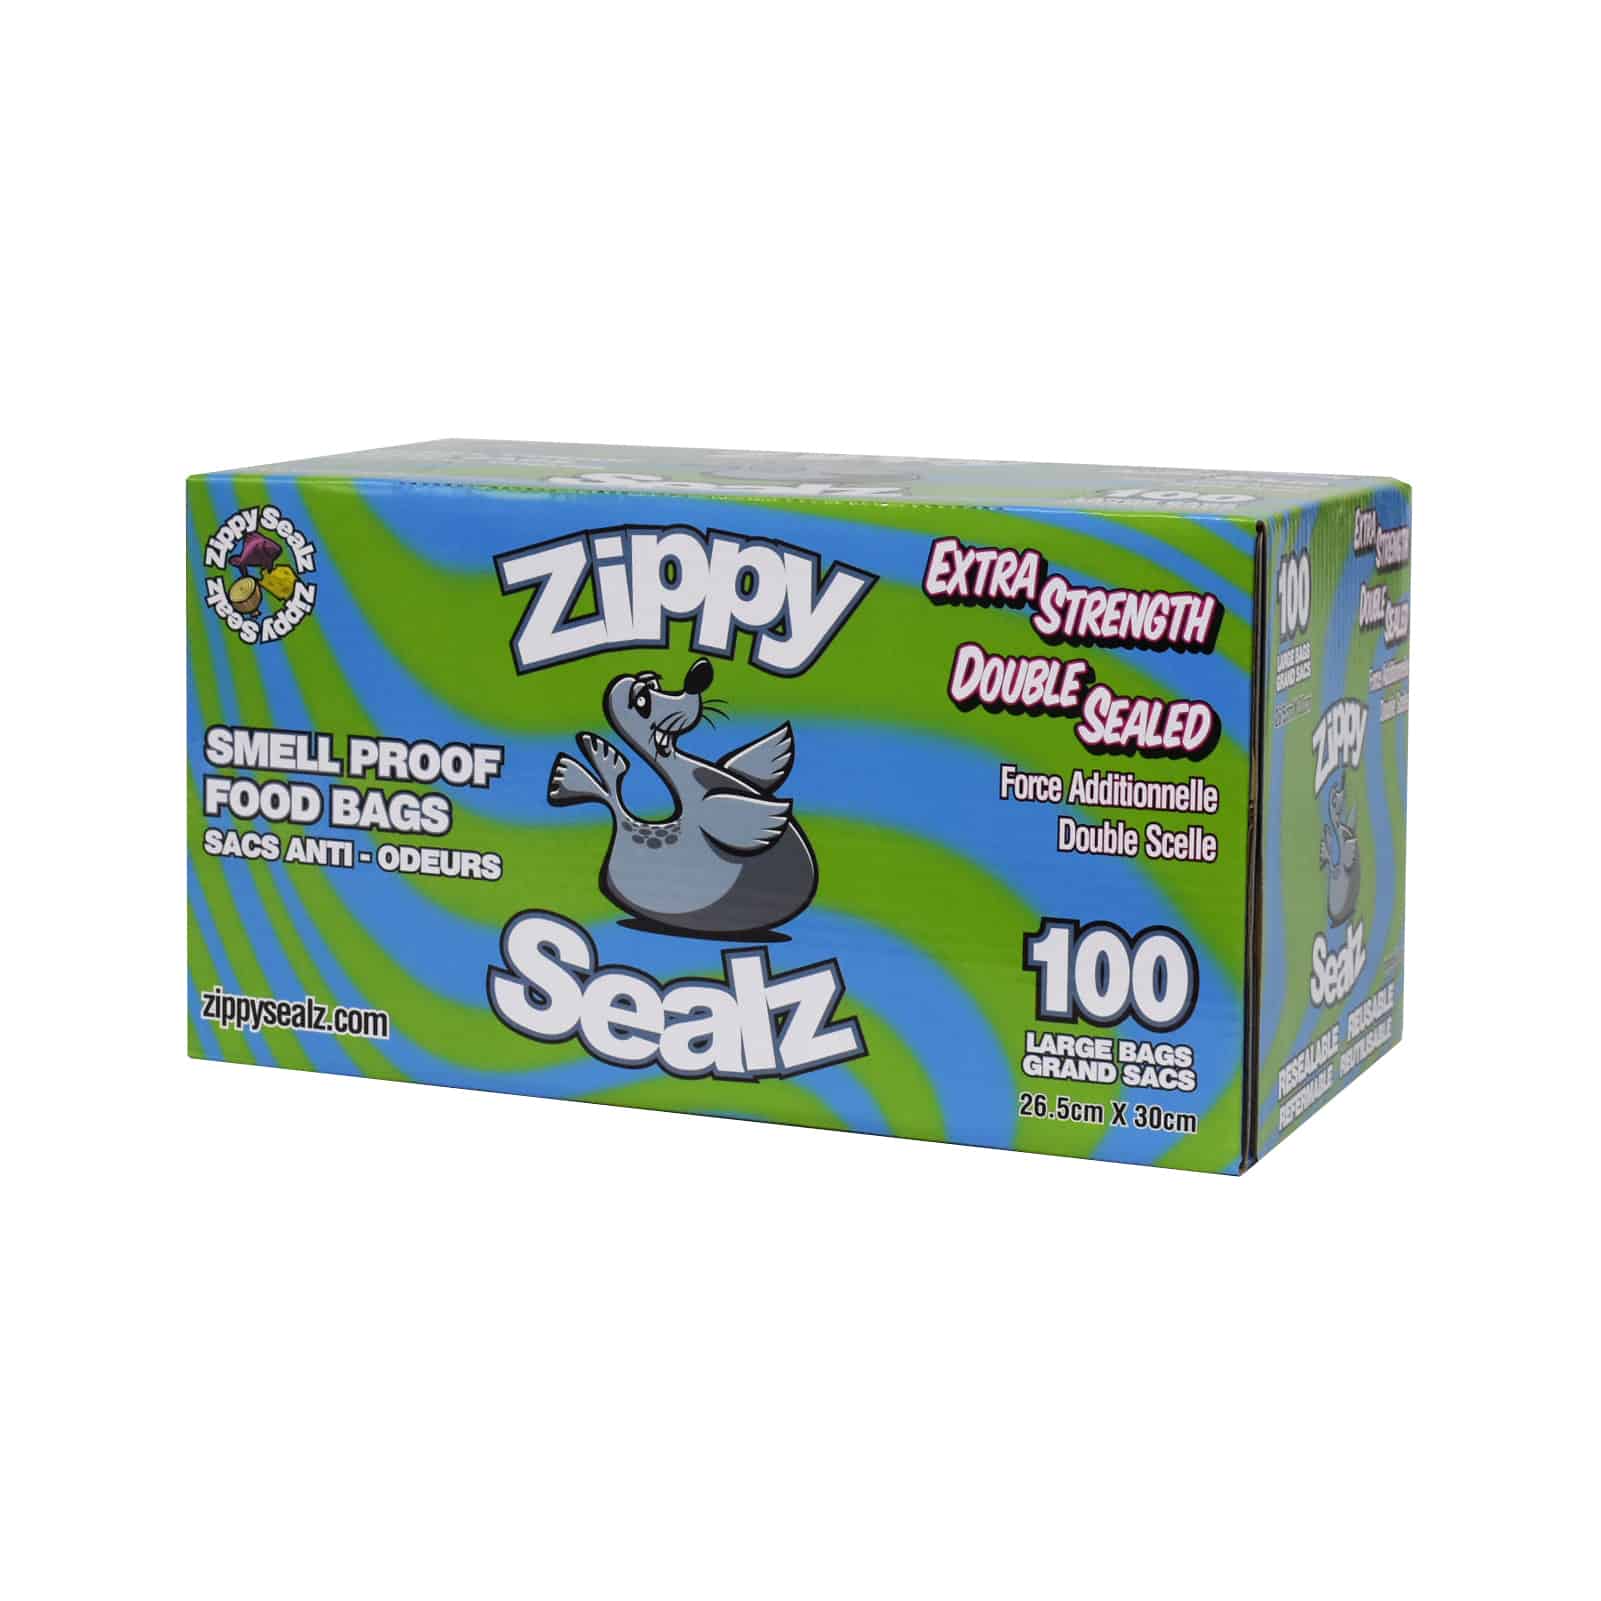 Zippy Sealz 100 bags box image angle